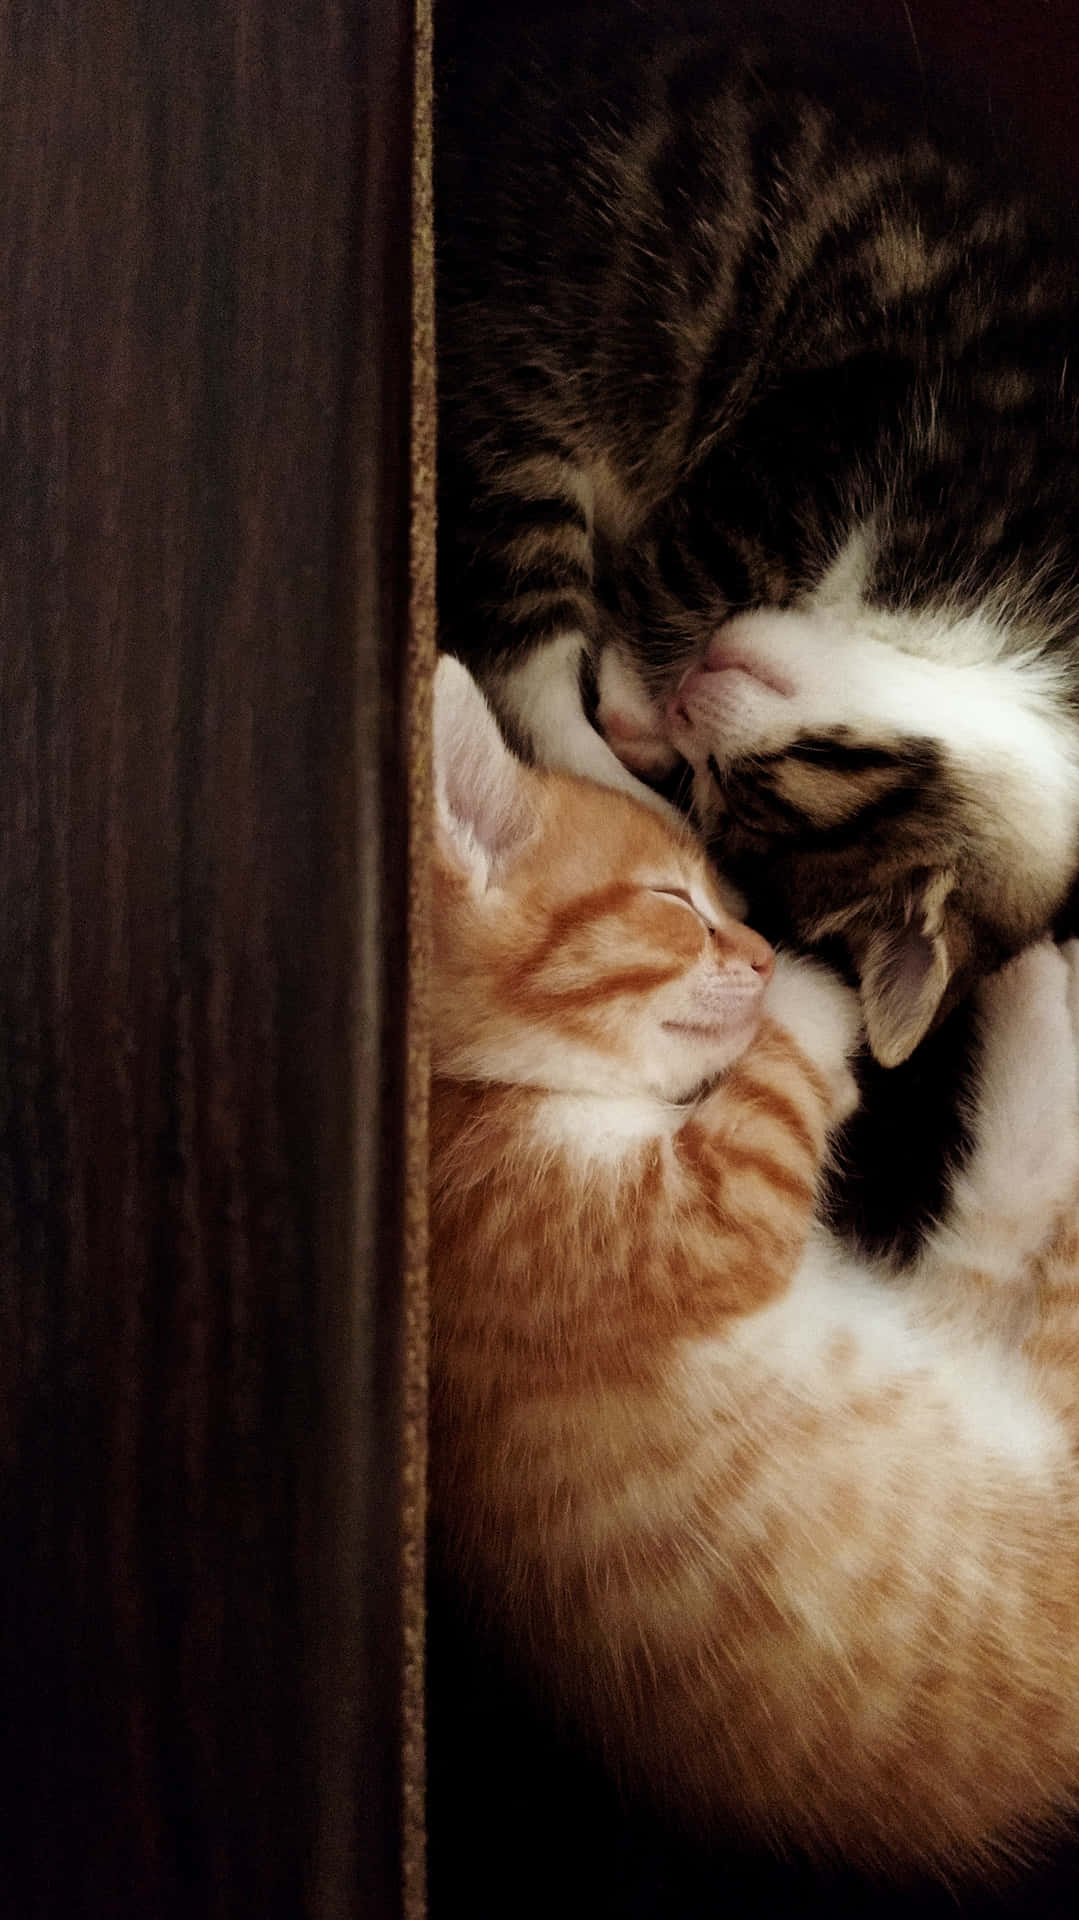 Cute Kittens Sleeping Together Wallpaper